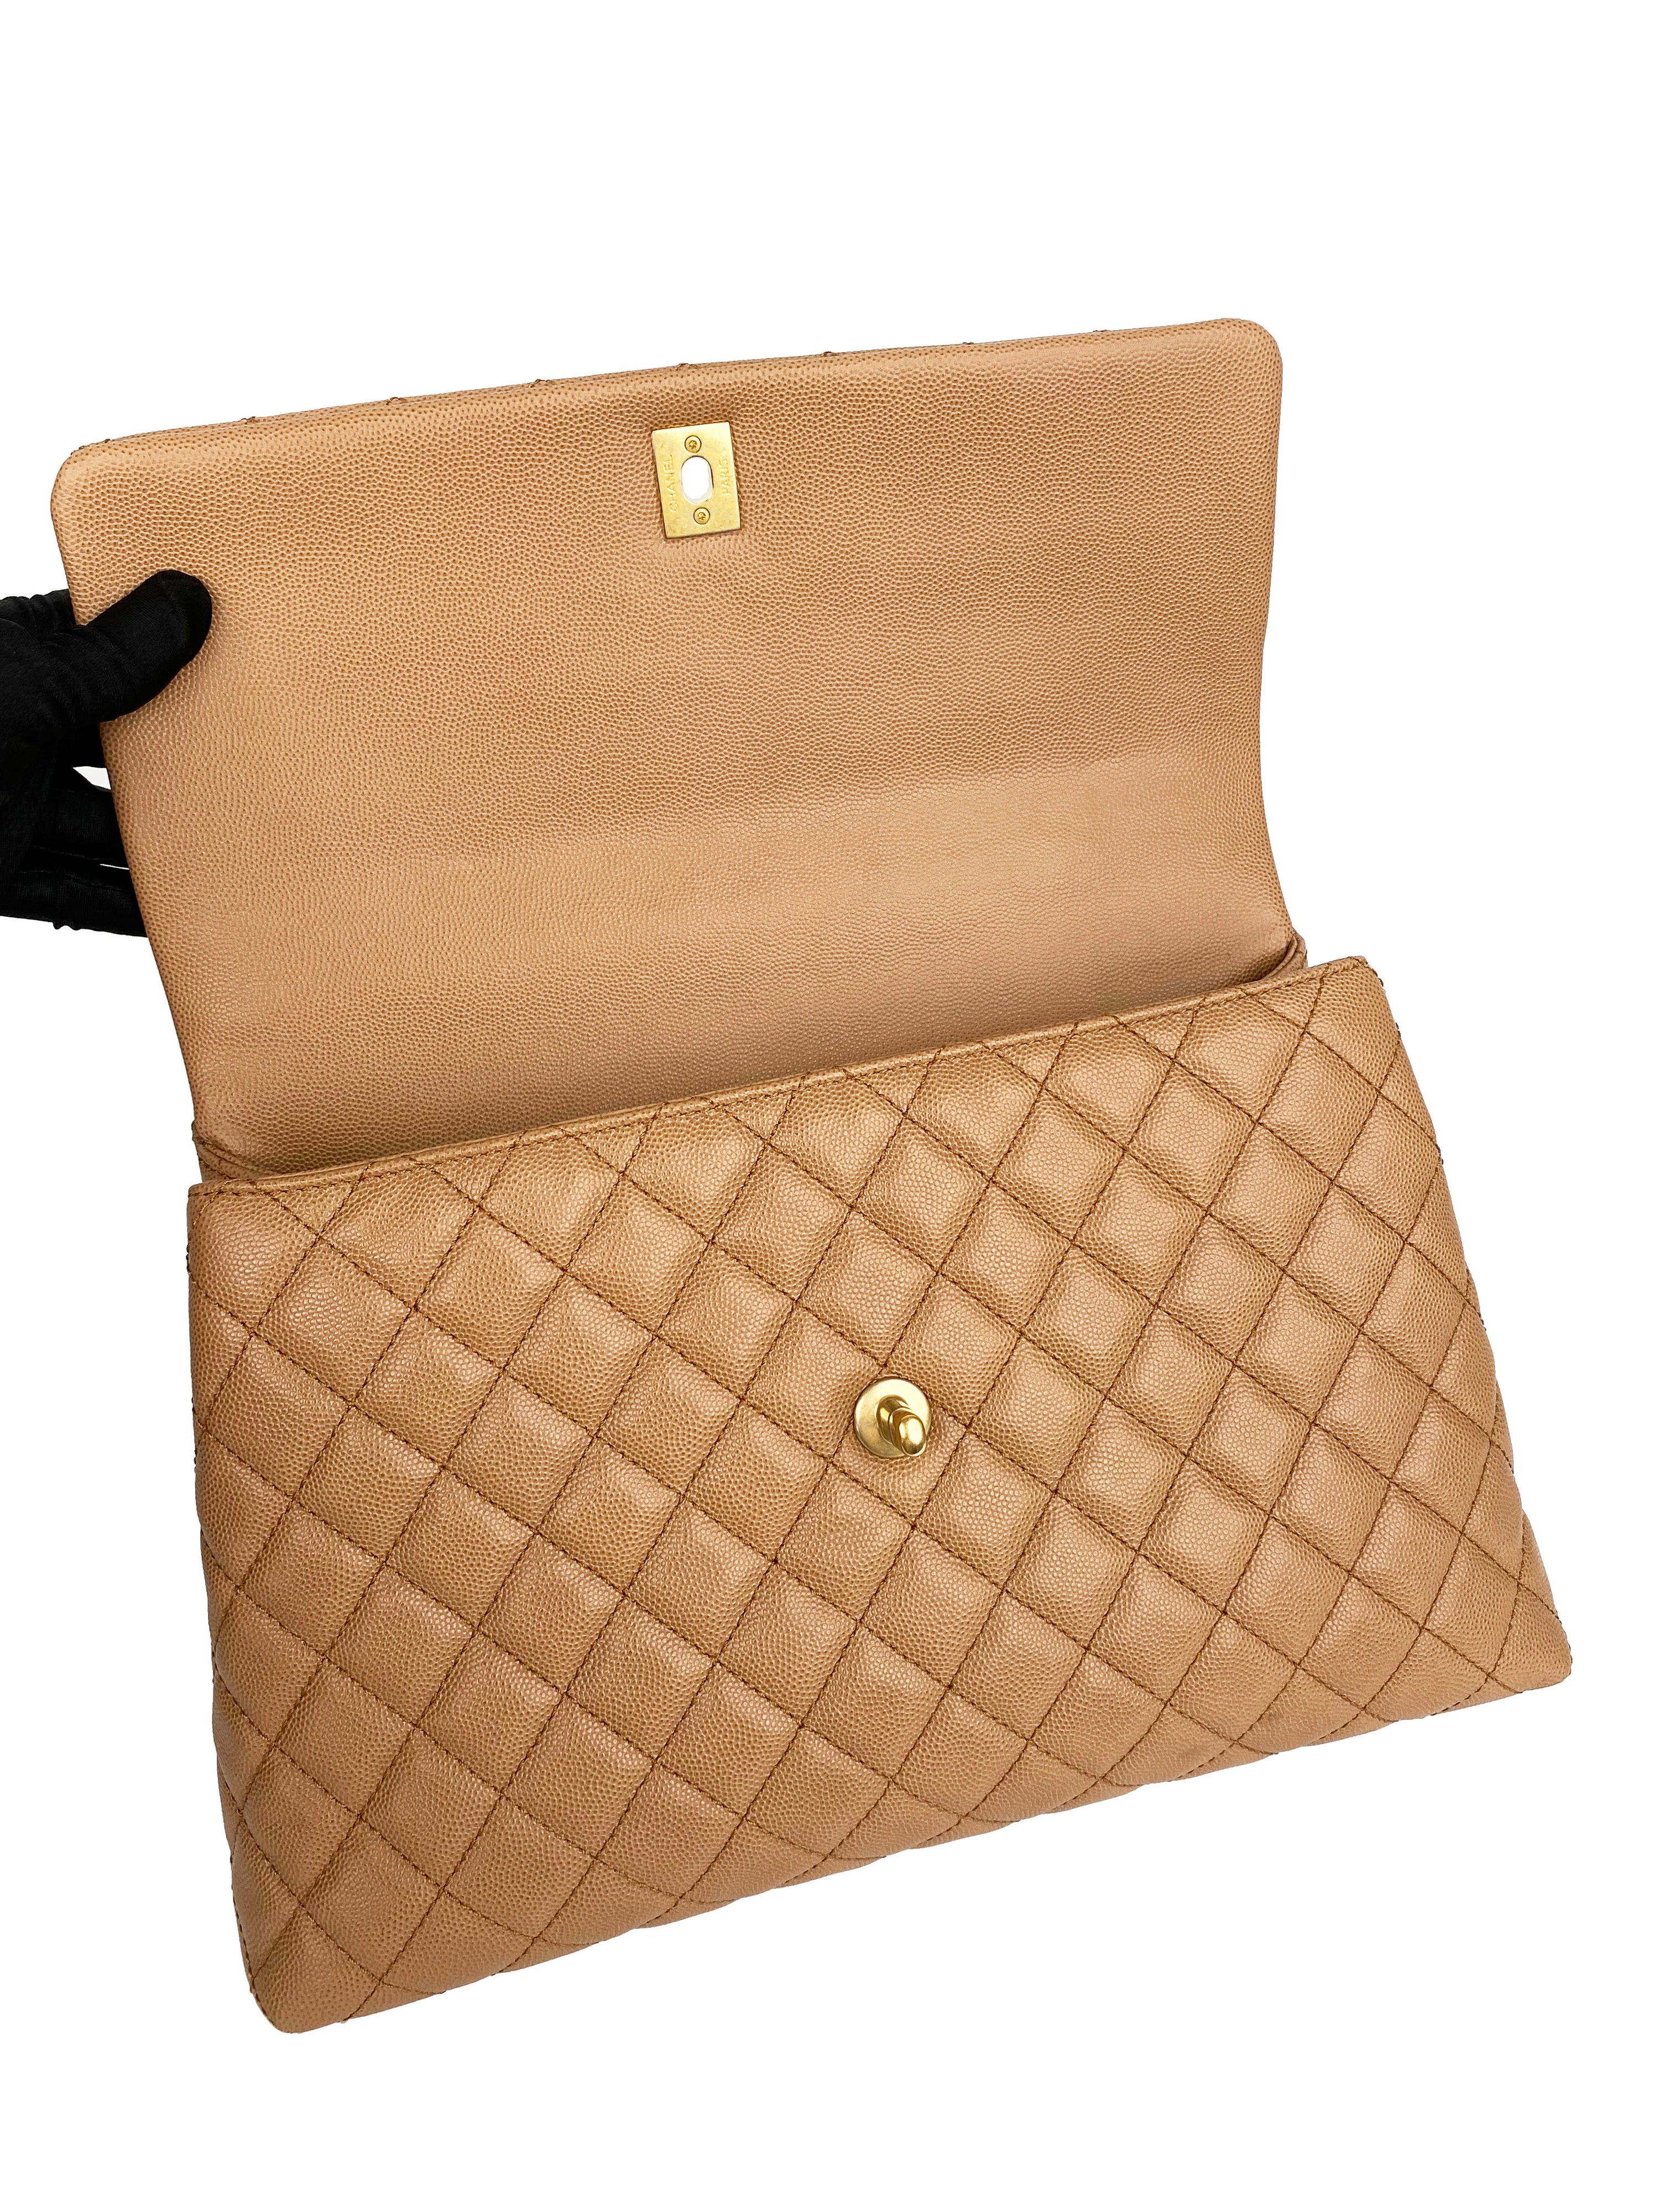 Chanel Large Beige Coco Lizard Handle Bag